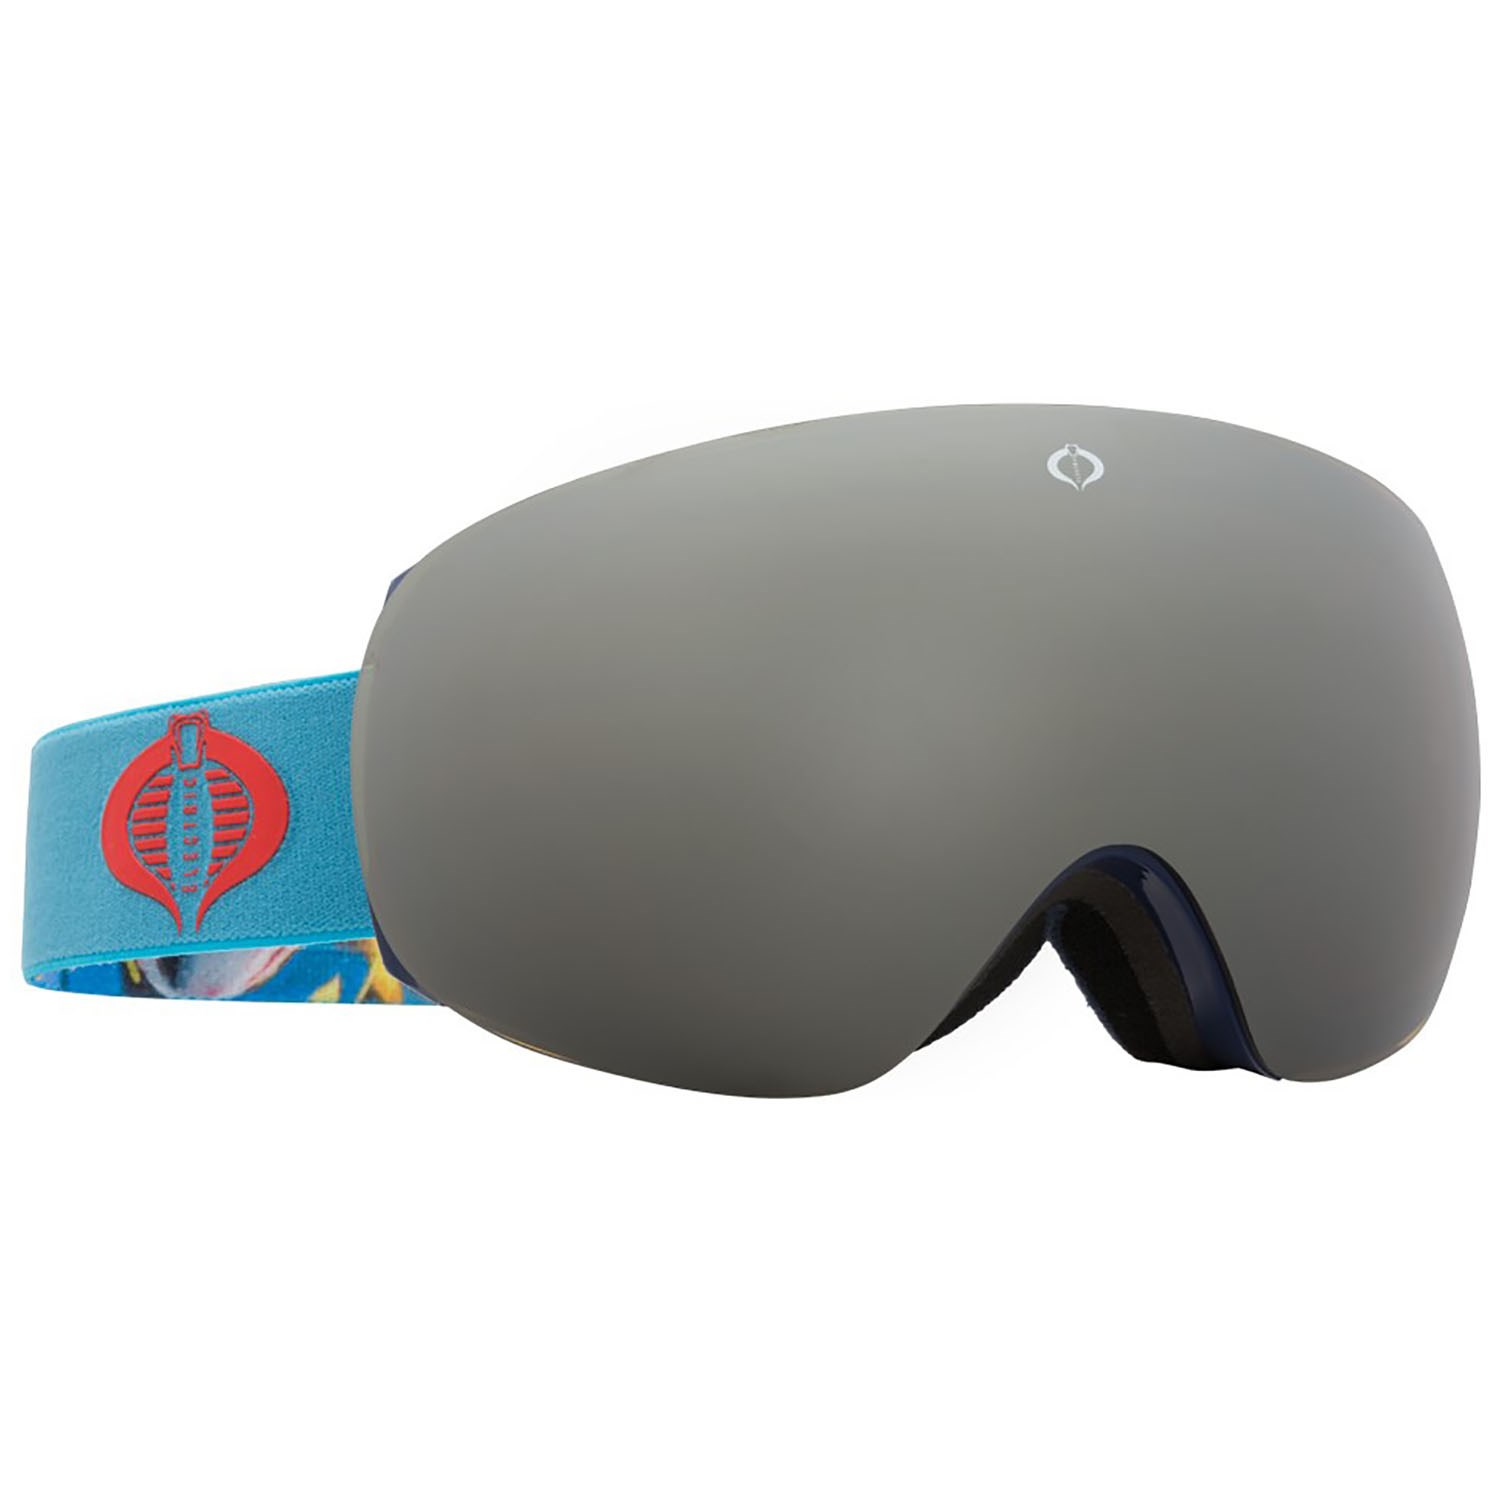 Camo Silver Chrome Lens New ELECTRIC EG.5s Snow Goggles 